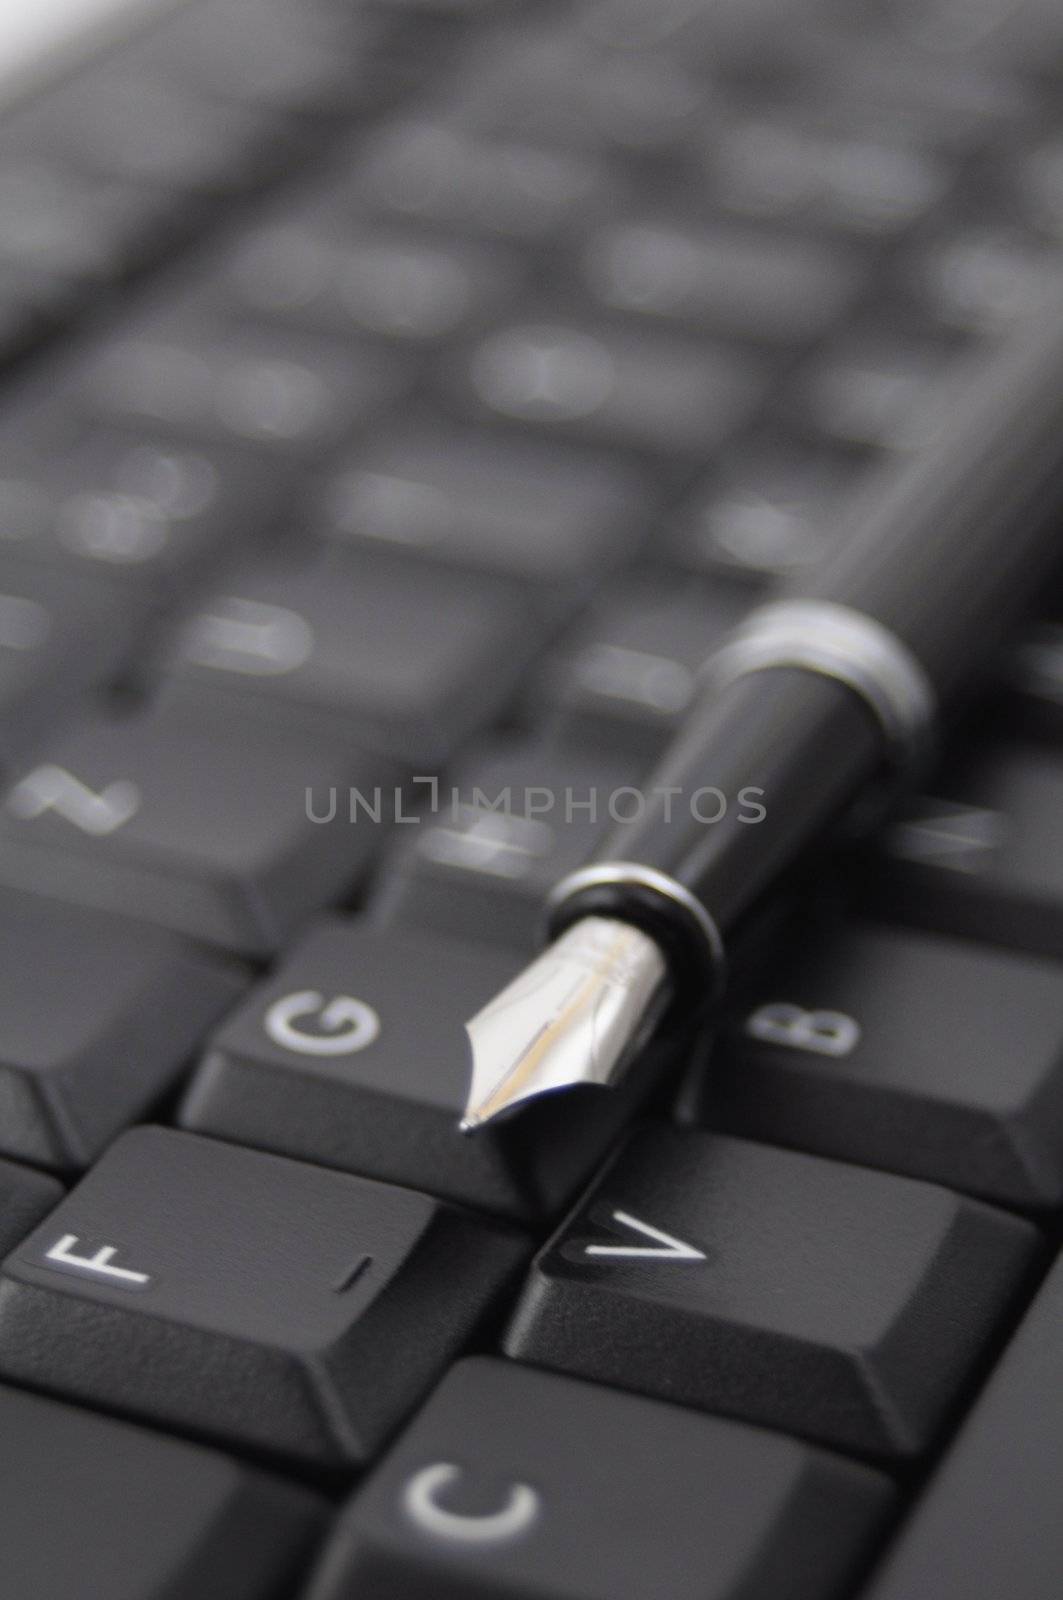 pen and keyboard by gunnar3000